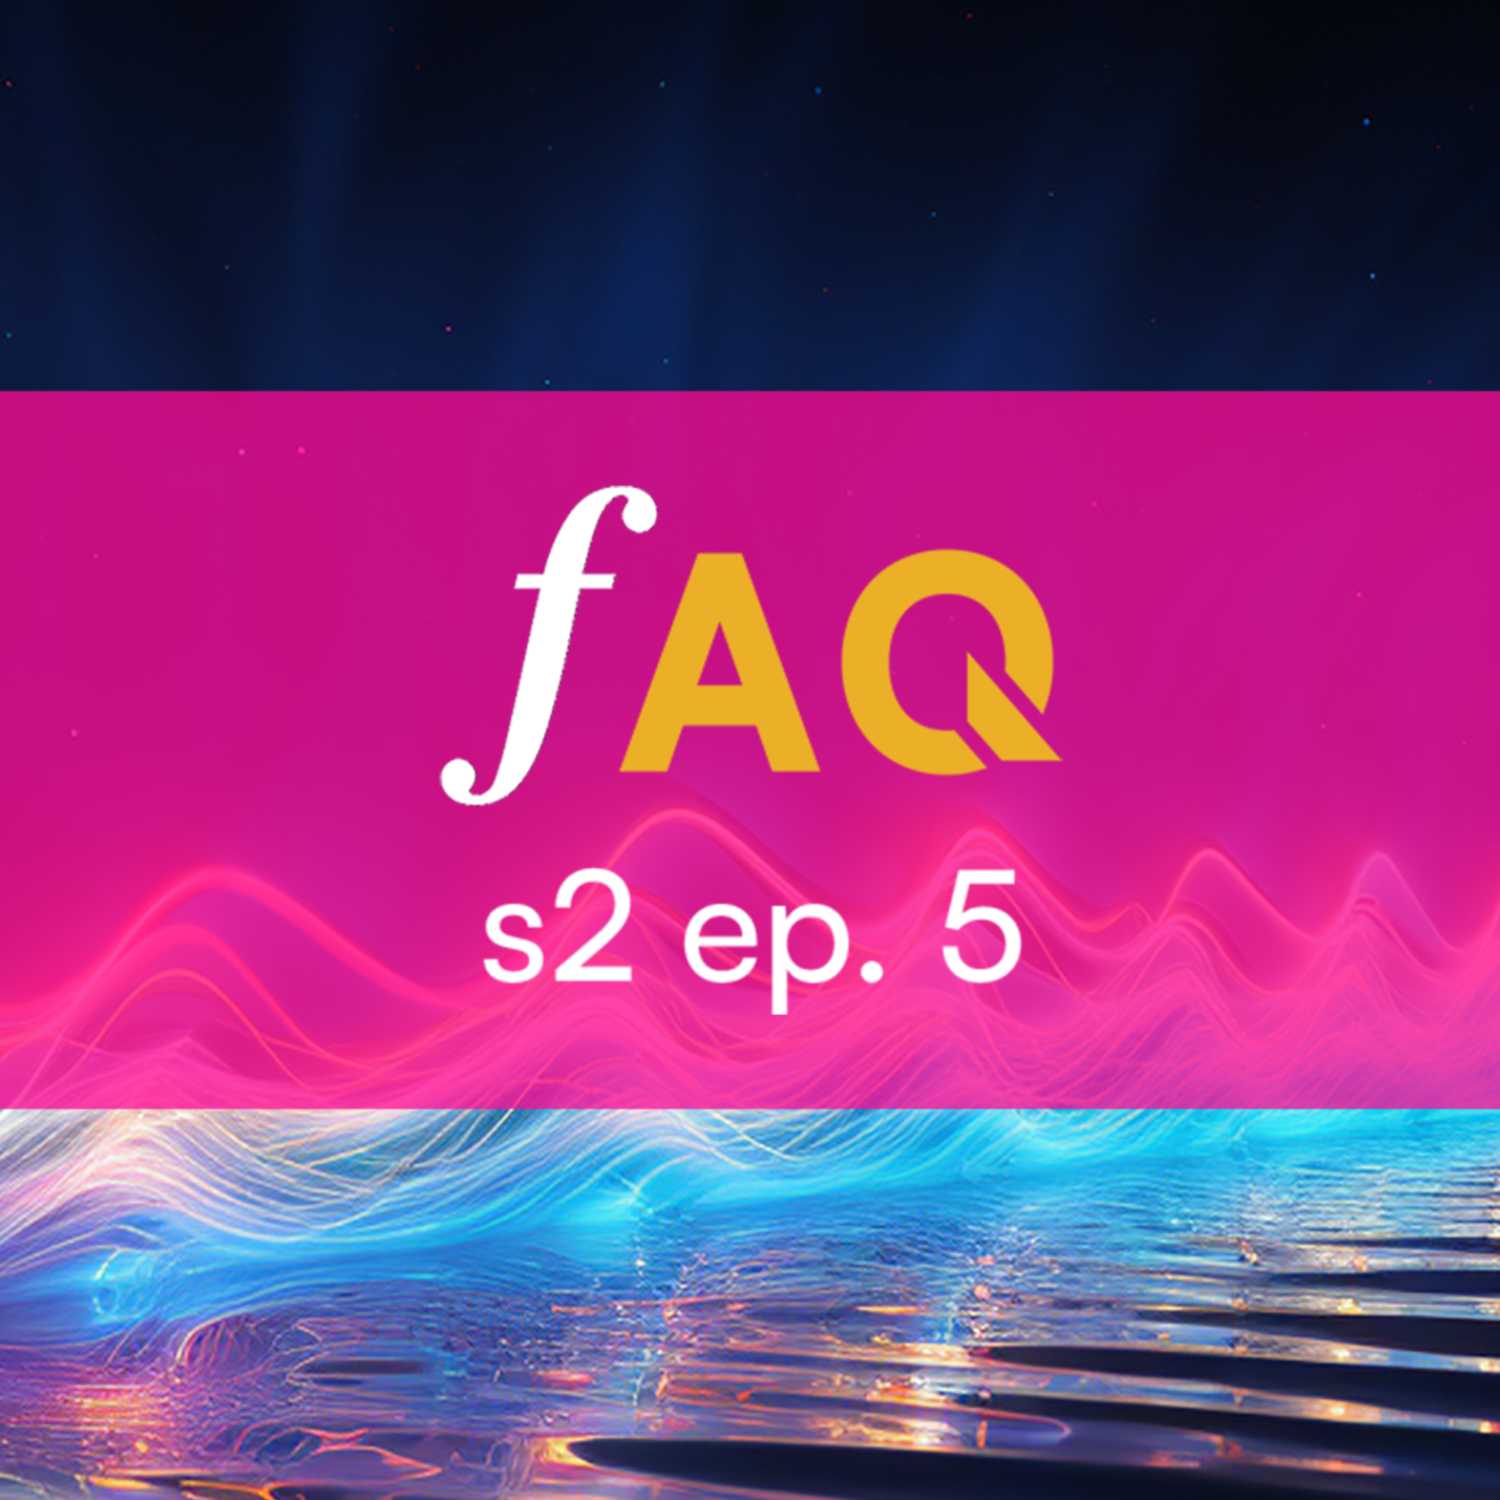 Creating quantum entanglement with calcium ions | fAQ podcast - season 2 ep. 5